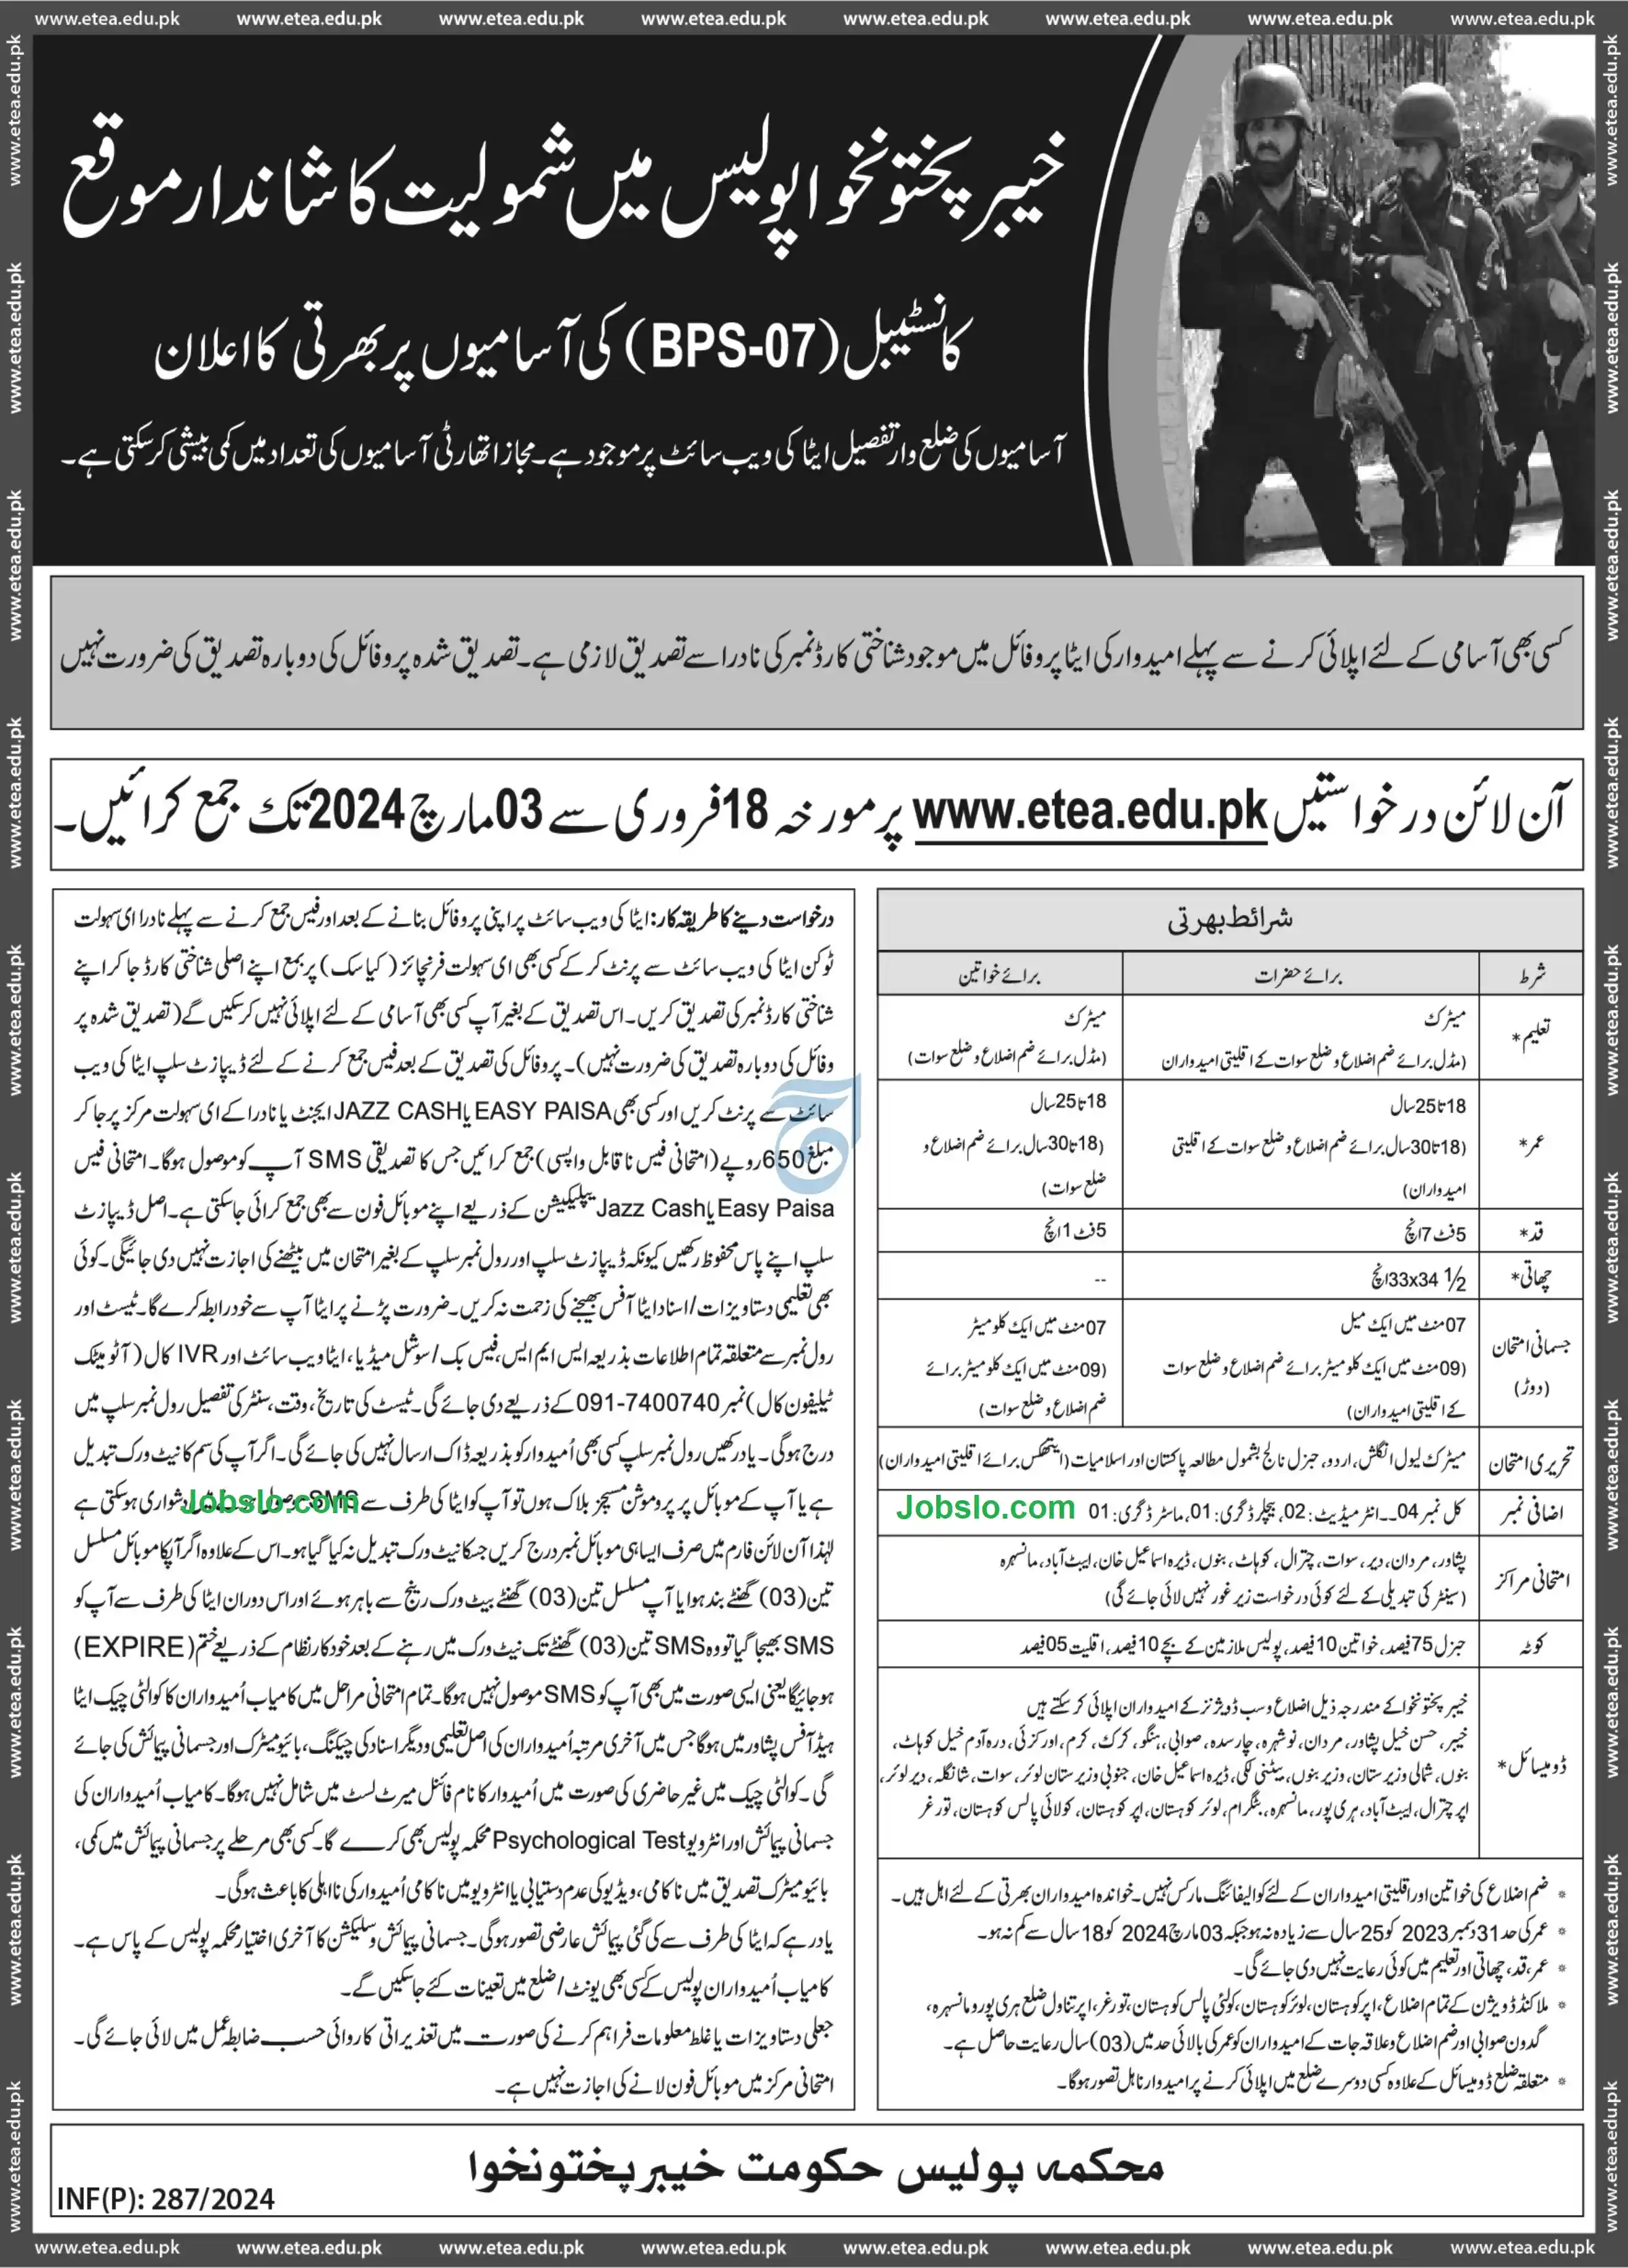 Khyber Pakhtunkhwa Police Jobs Image No - 587